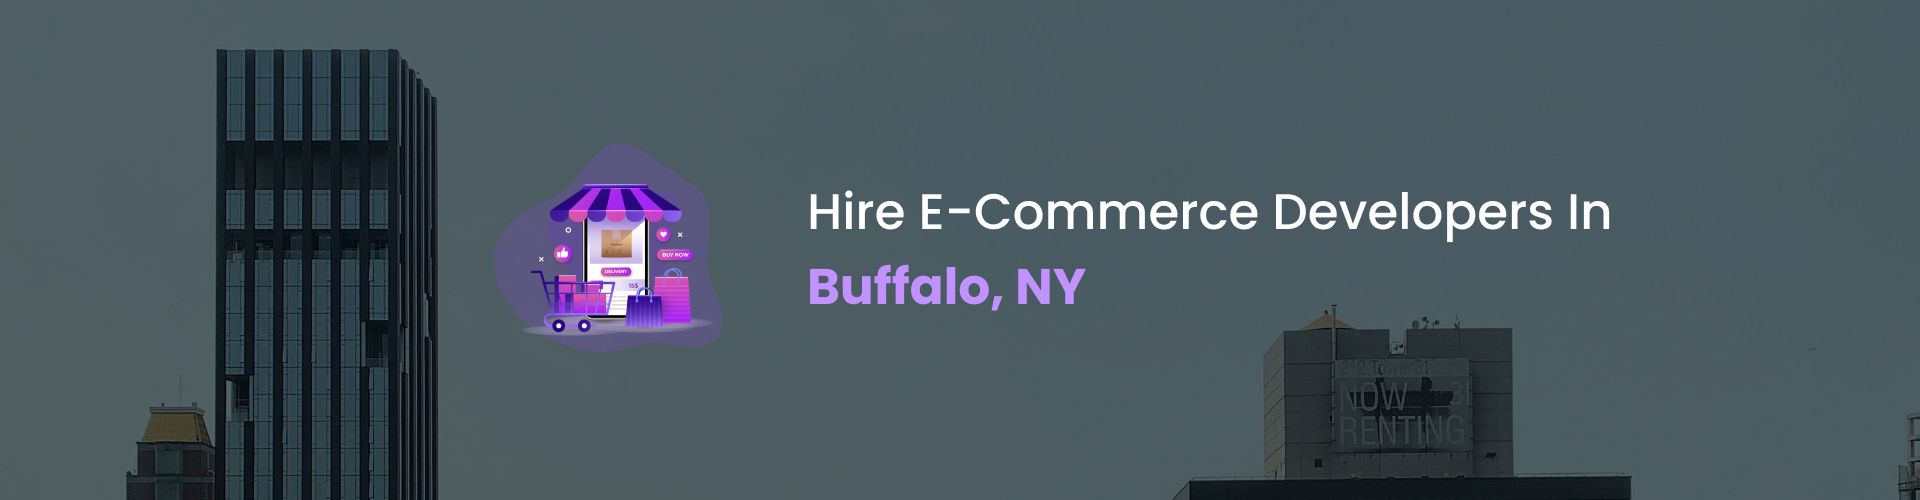 ecommerce developers in buffalo